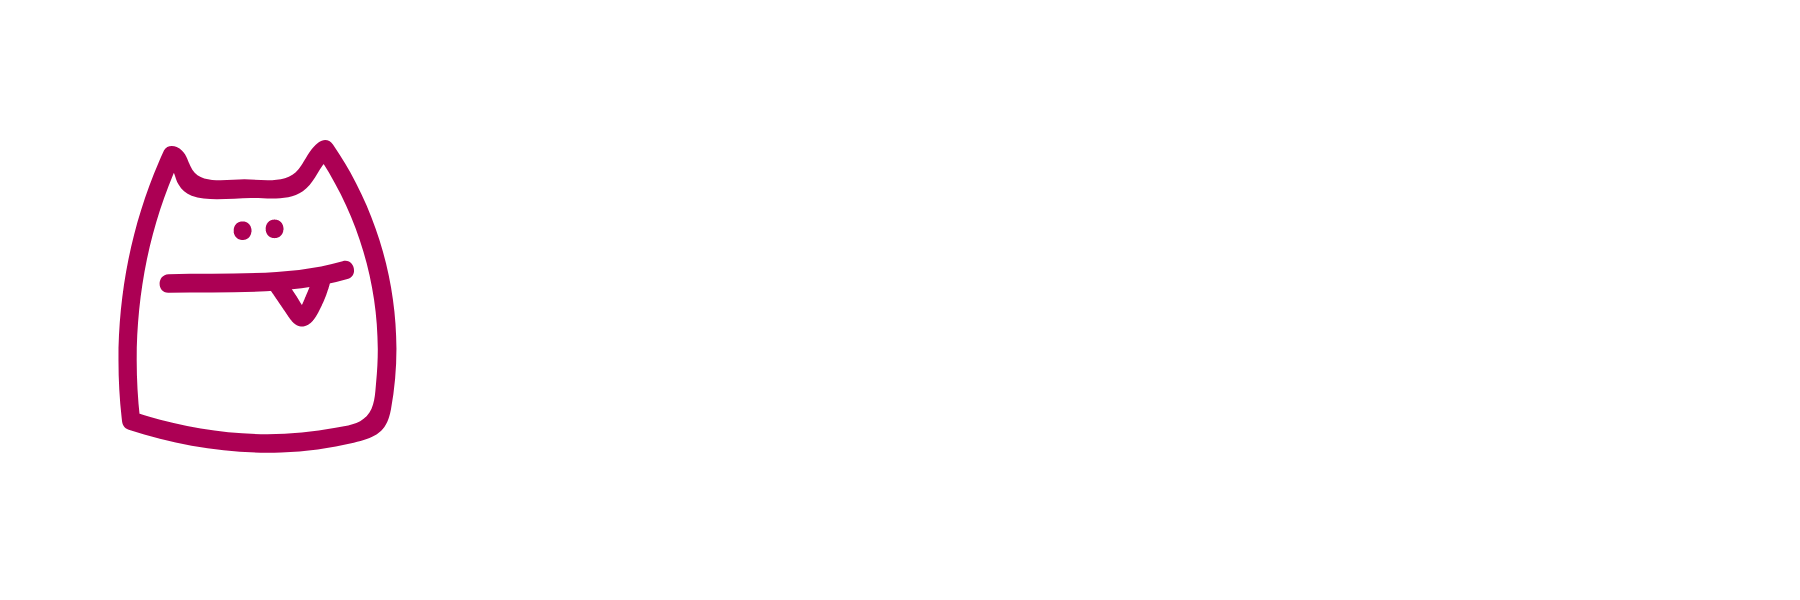 Maggpie Leigh